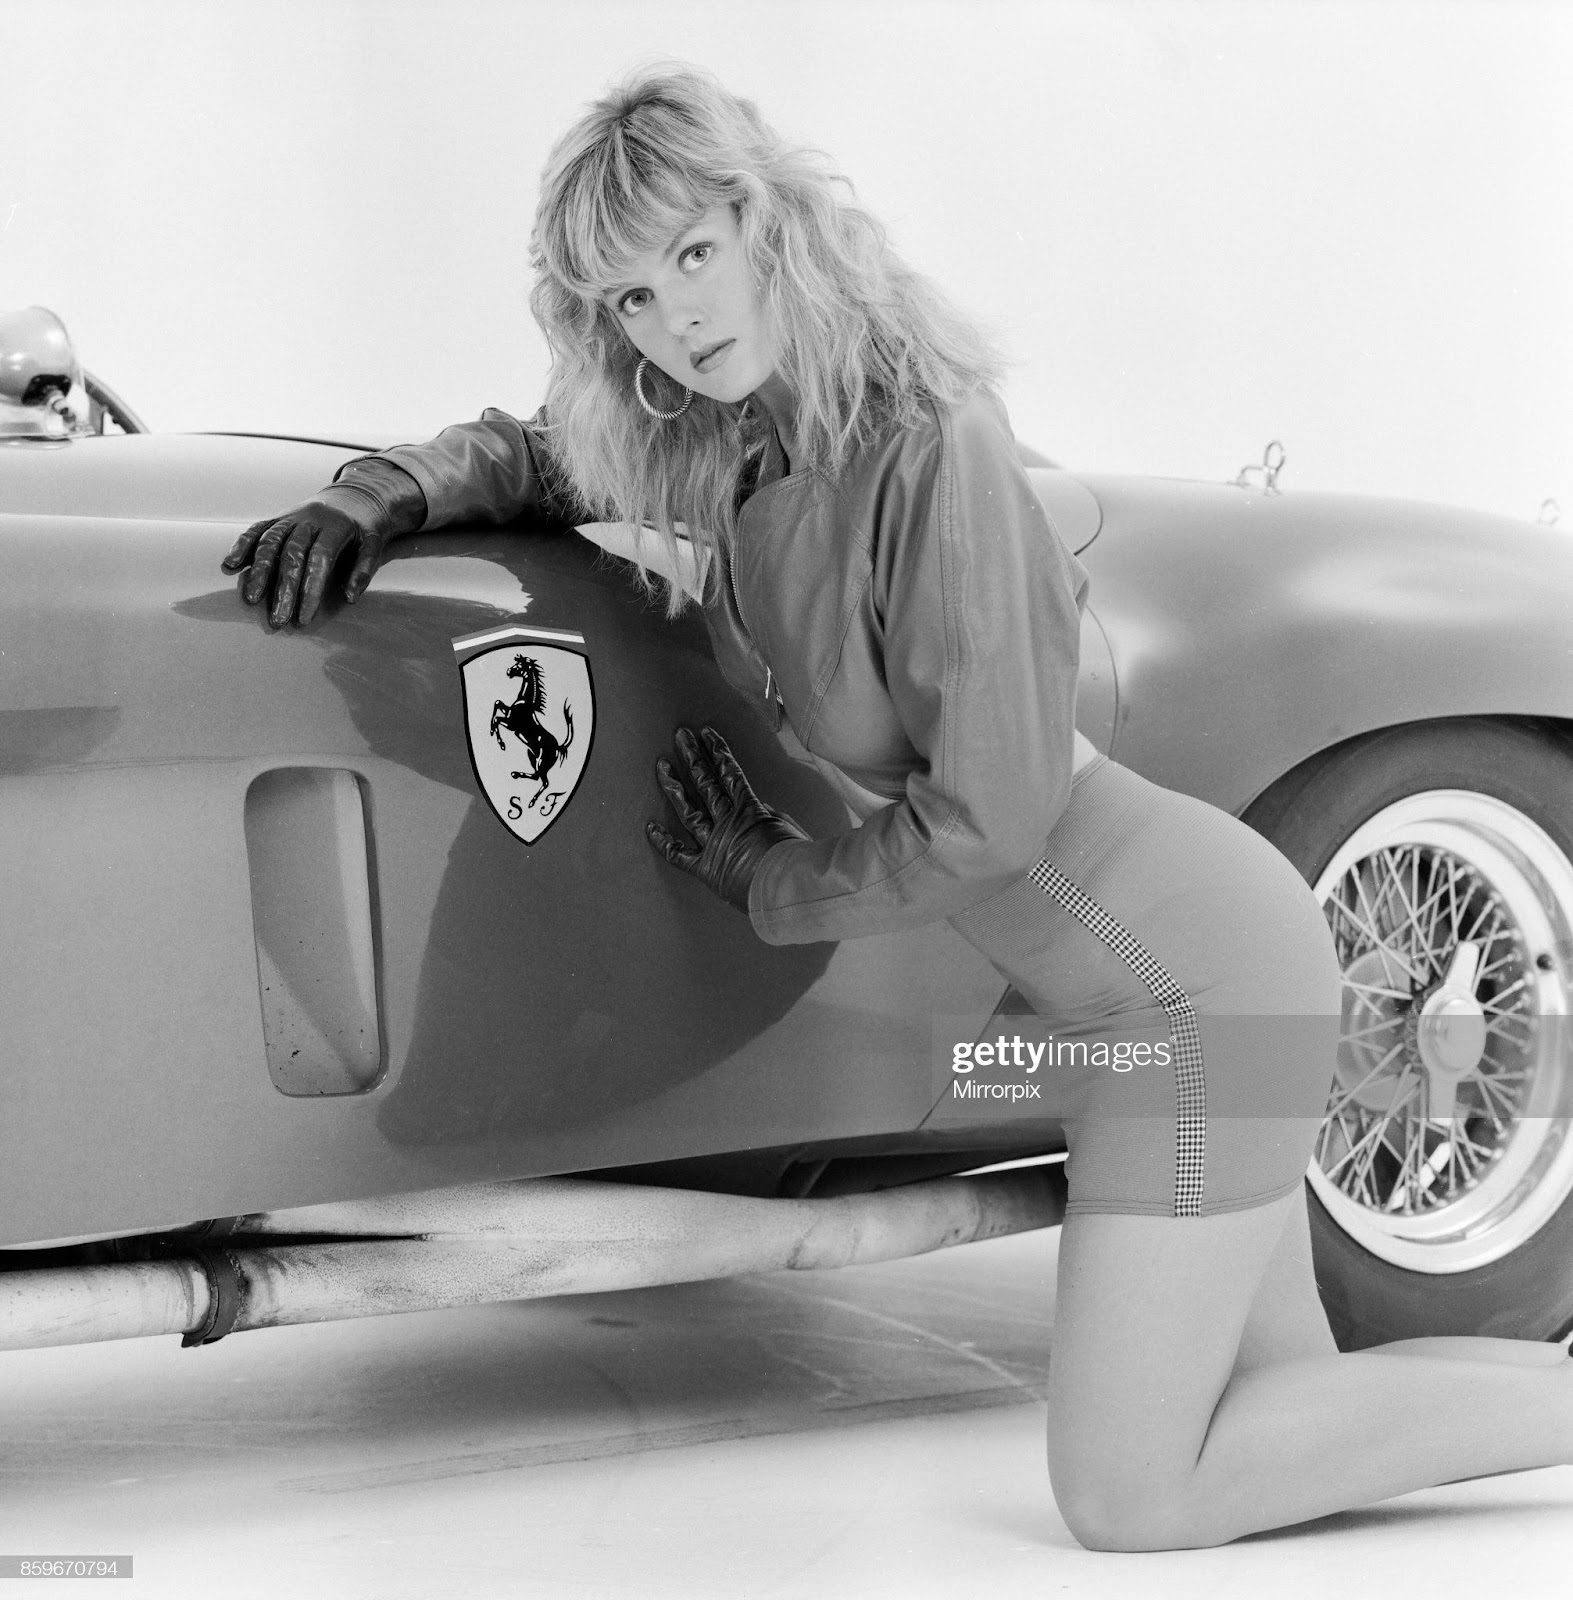 D:\Documenti\posts\posts\Women and motorsport\foto\1988\glamour-model-caroline-delahunty-poses-next-to-a-ferrari-19th-april-picture-id859670794.jpg